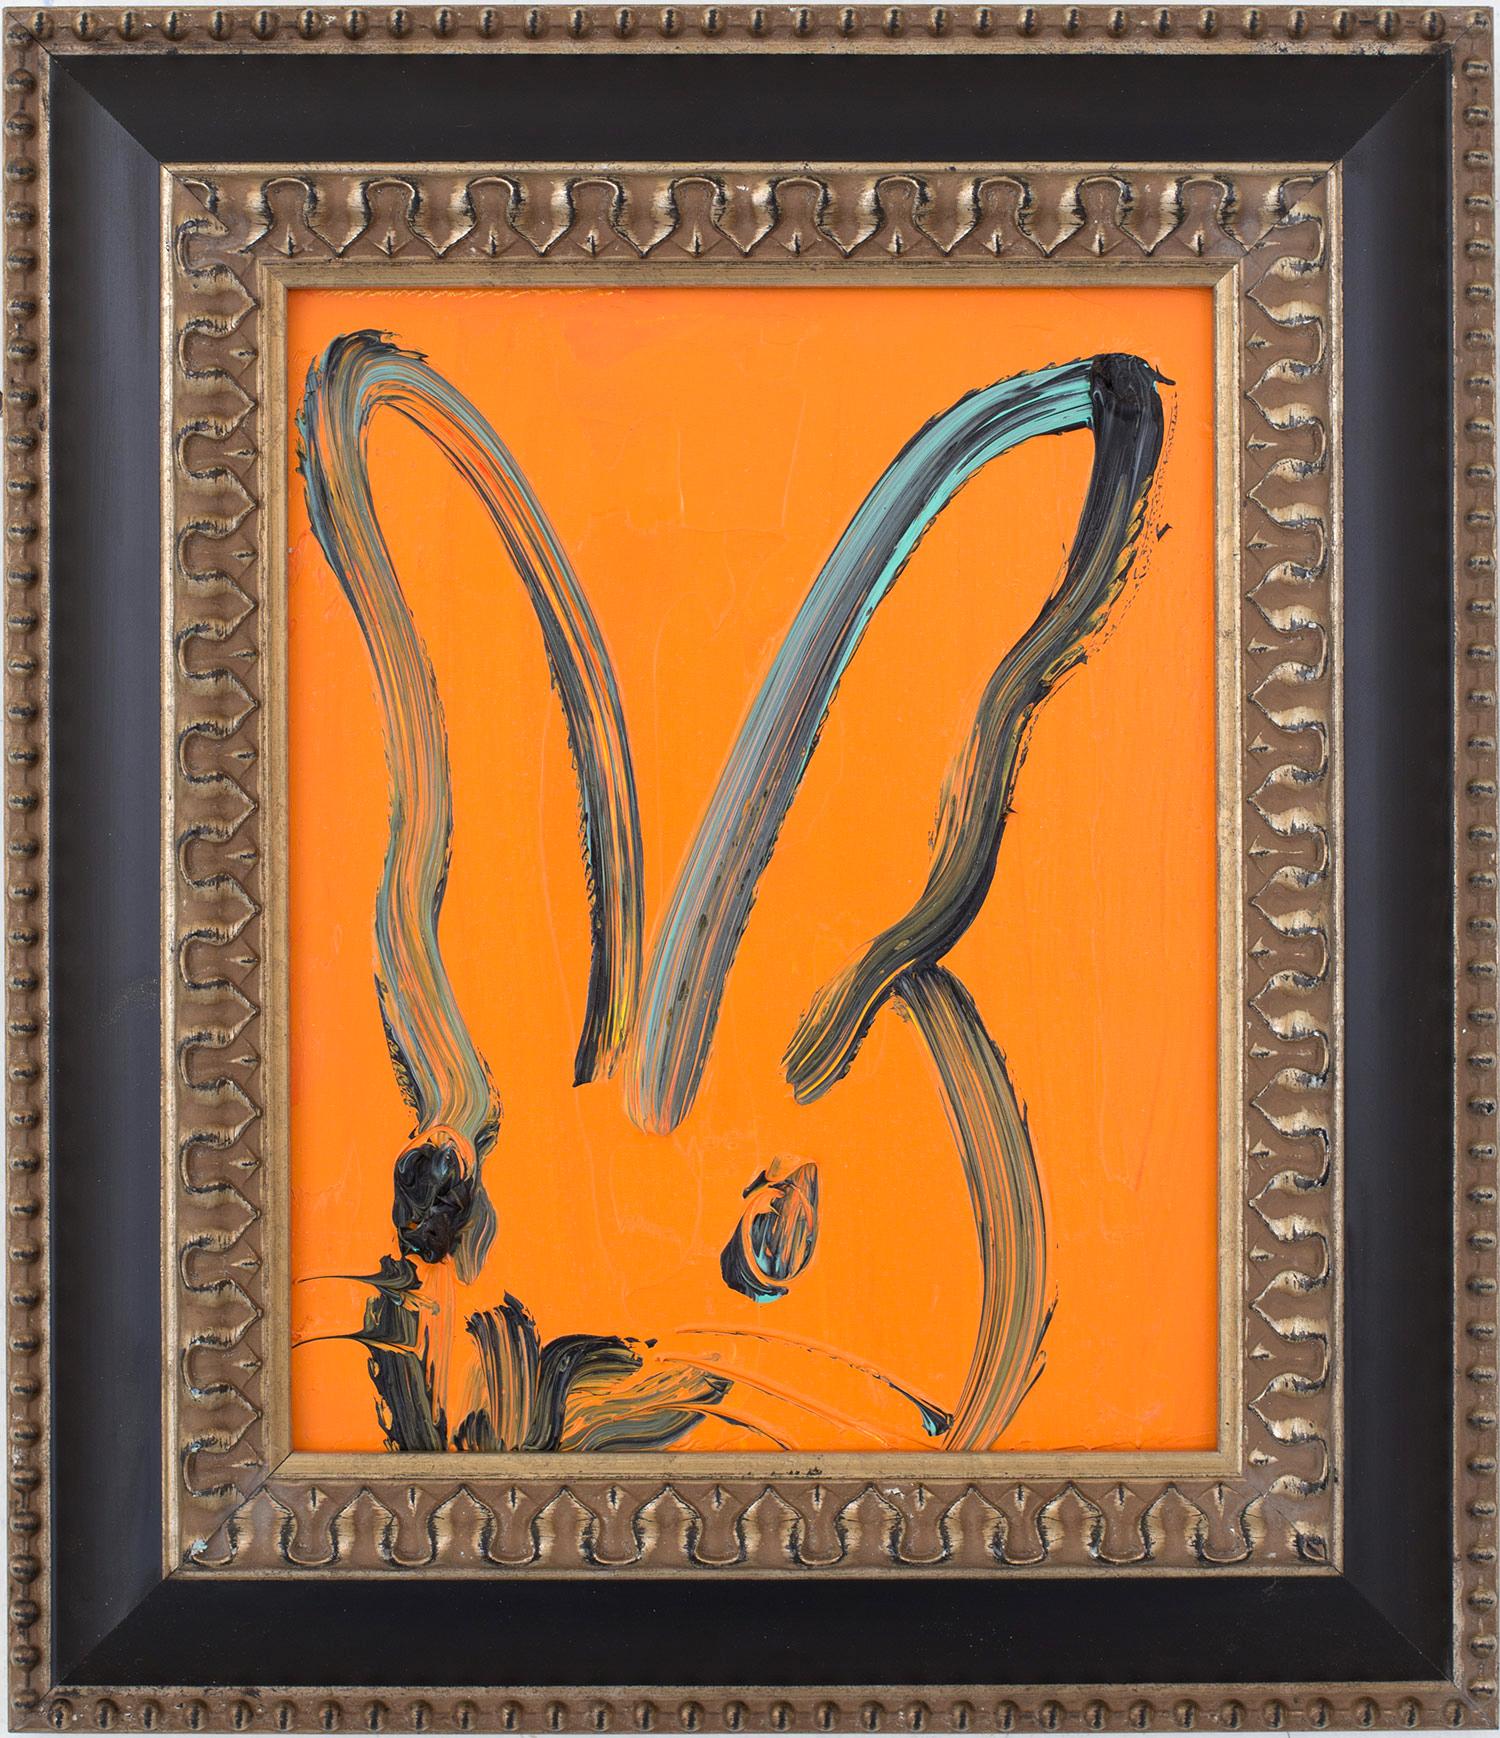 Hunt Slonem Animal Painting - "Untitled (Bunny on Hot Orange)" Oil Painting on Wood Panel